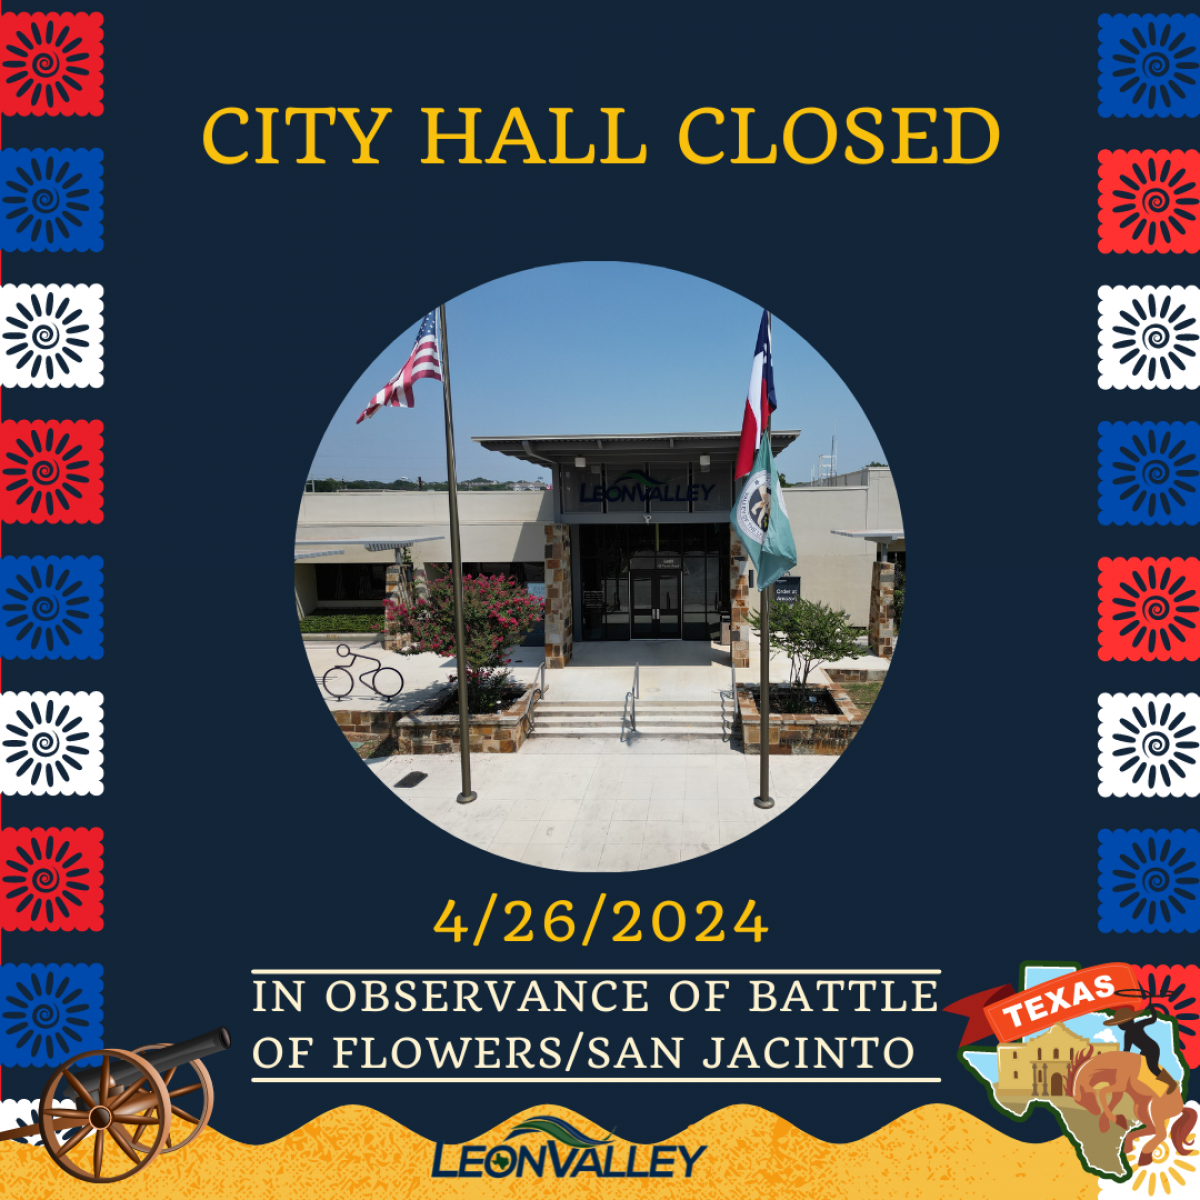 City Hall Closure notice